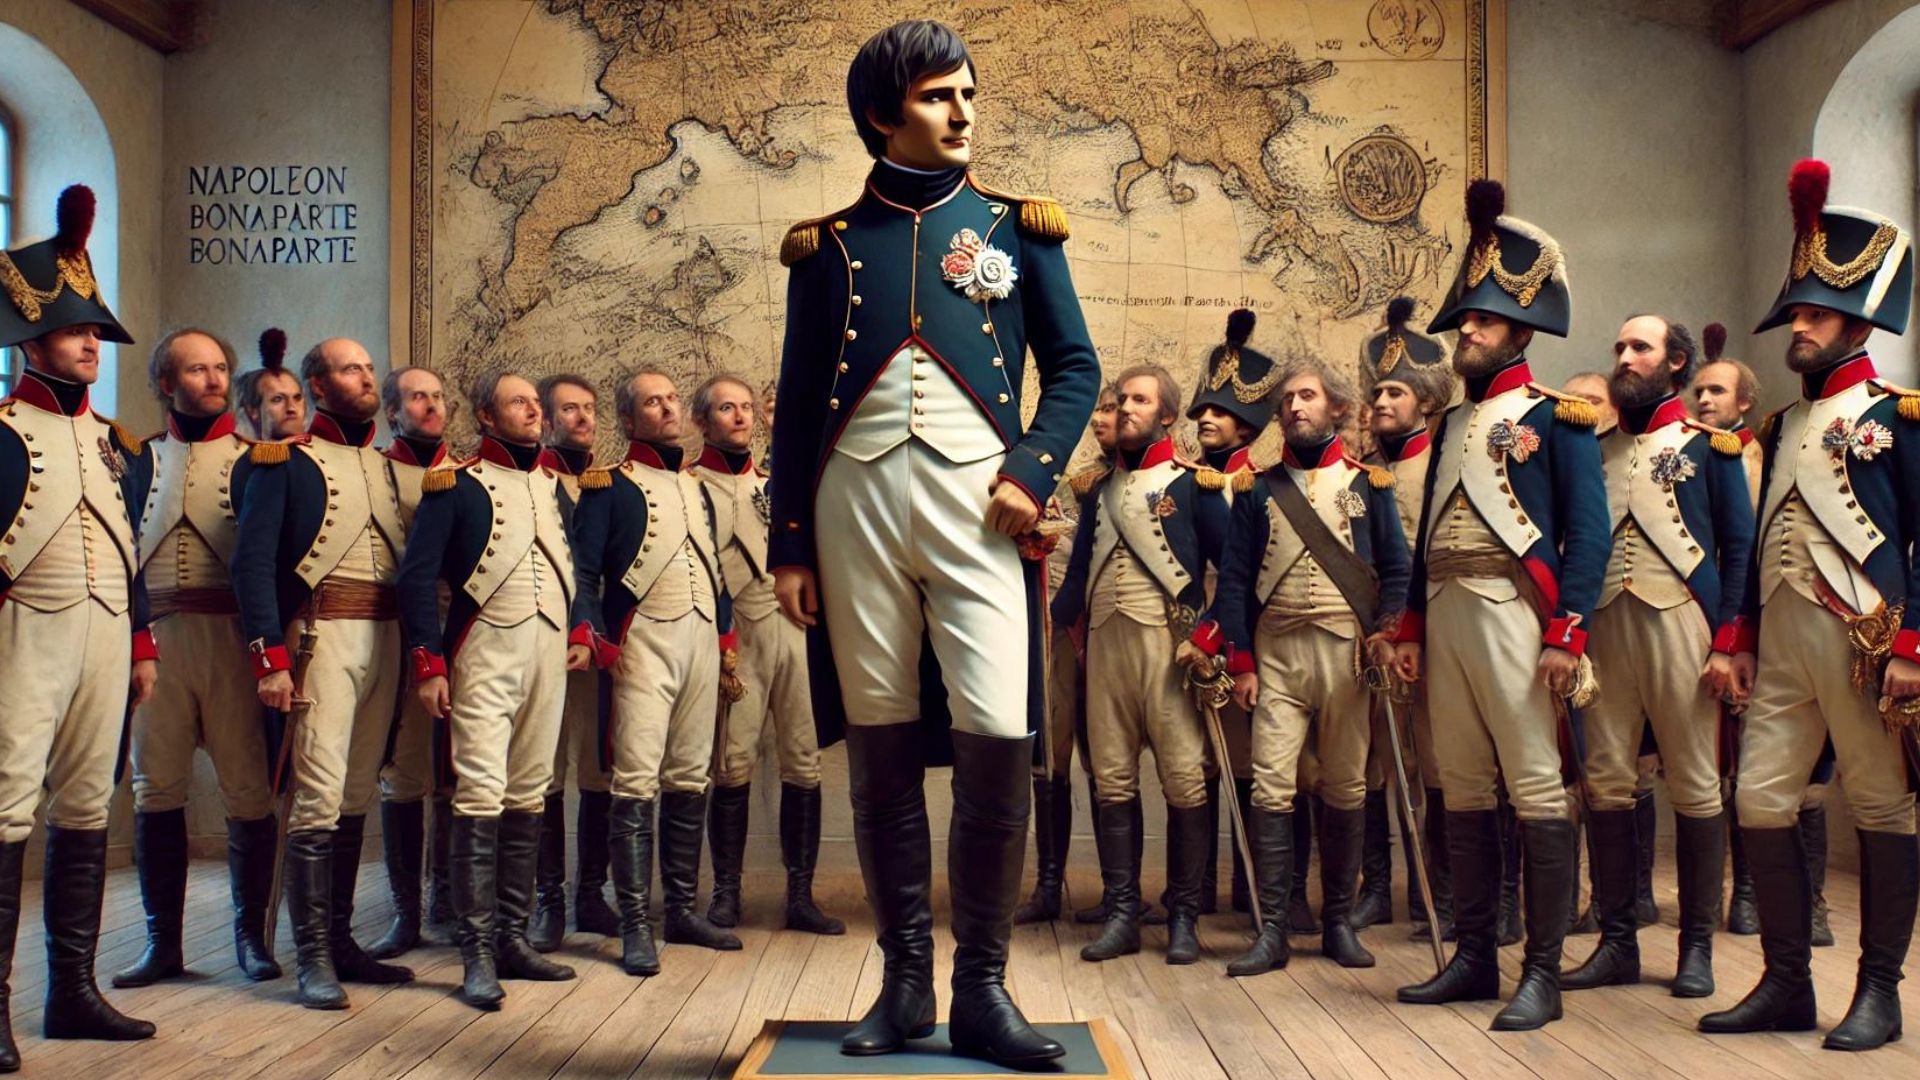 Napoleon wasn't actually short